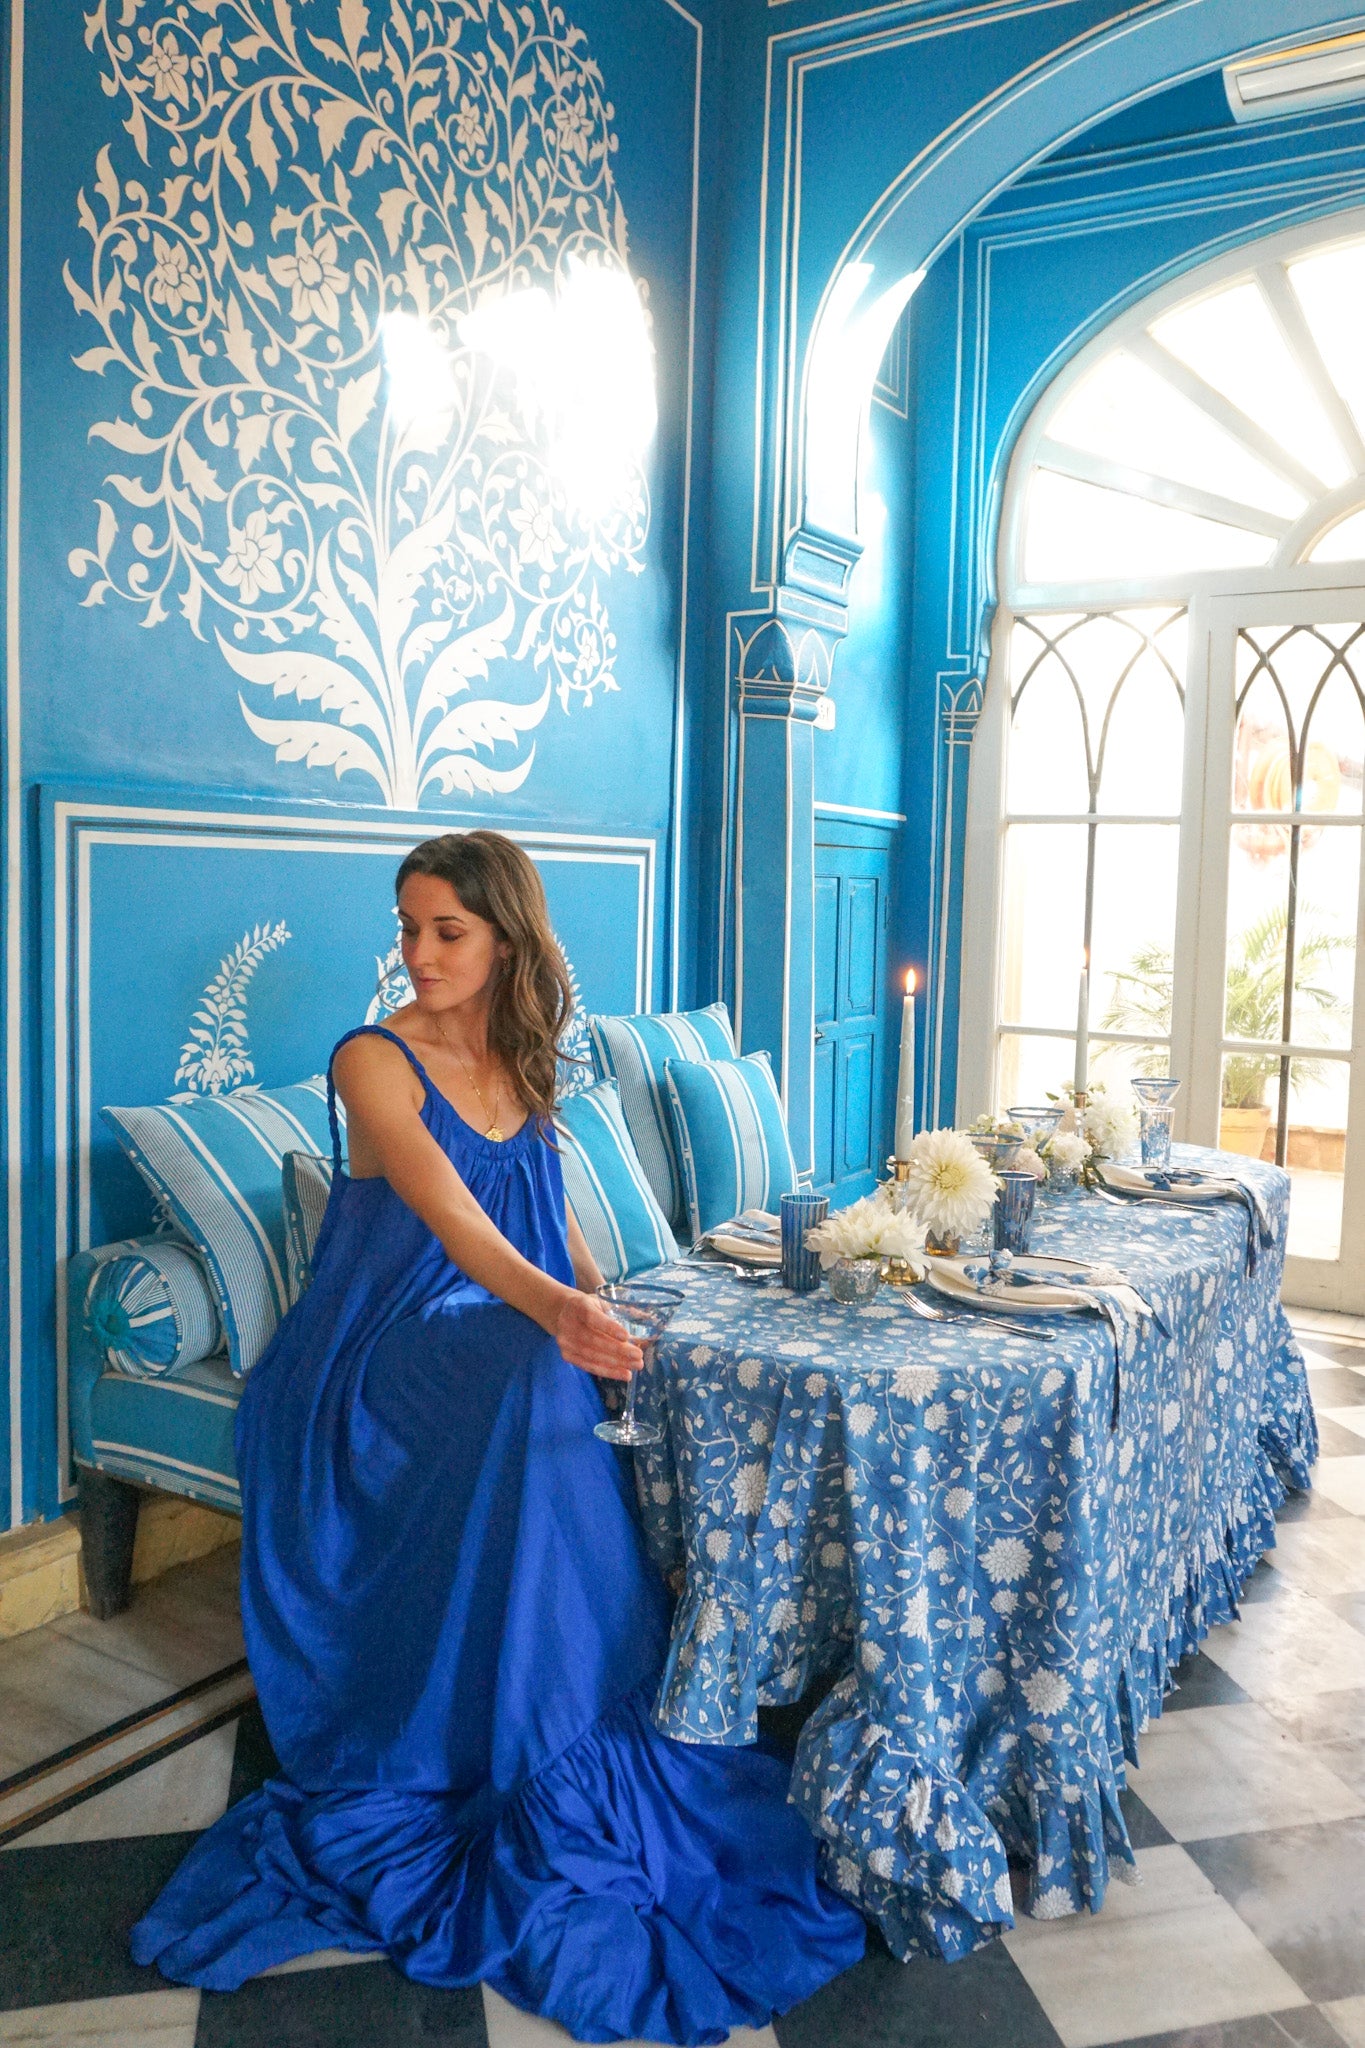 Bar Palladio Rosanna Falconer in blue Kalita dress sitting at table